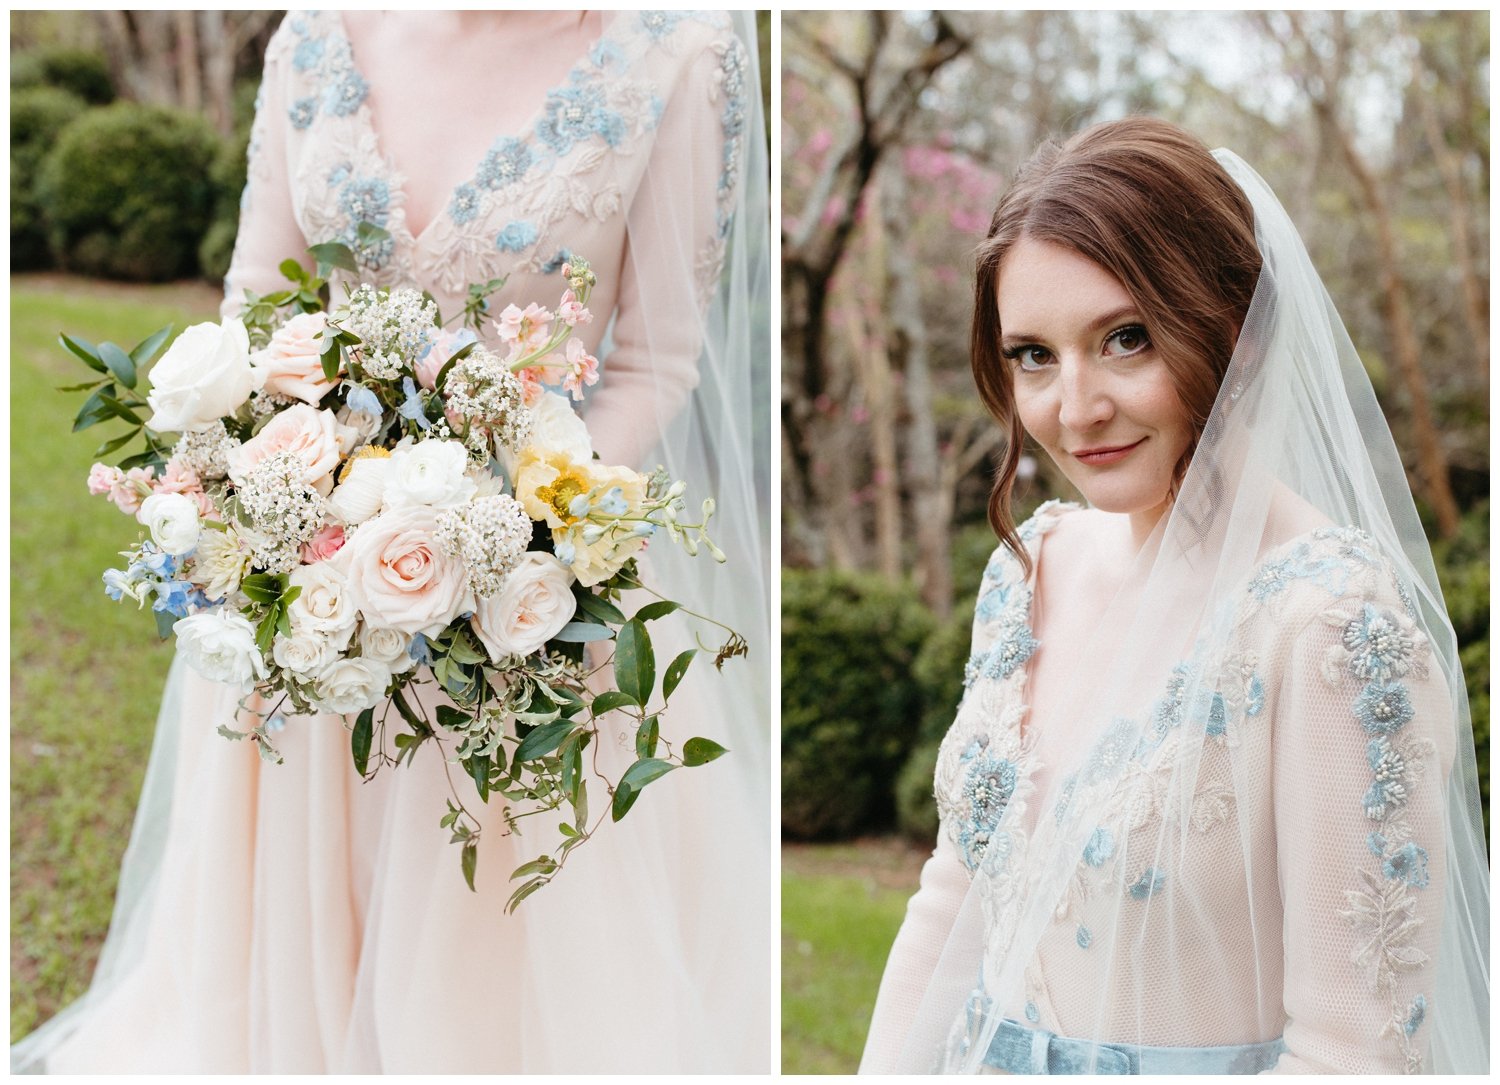 Details of bride's bouquet and veil at Atlanta intimate wedding venue